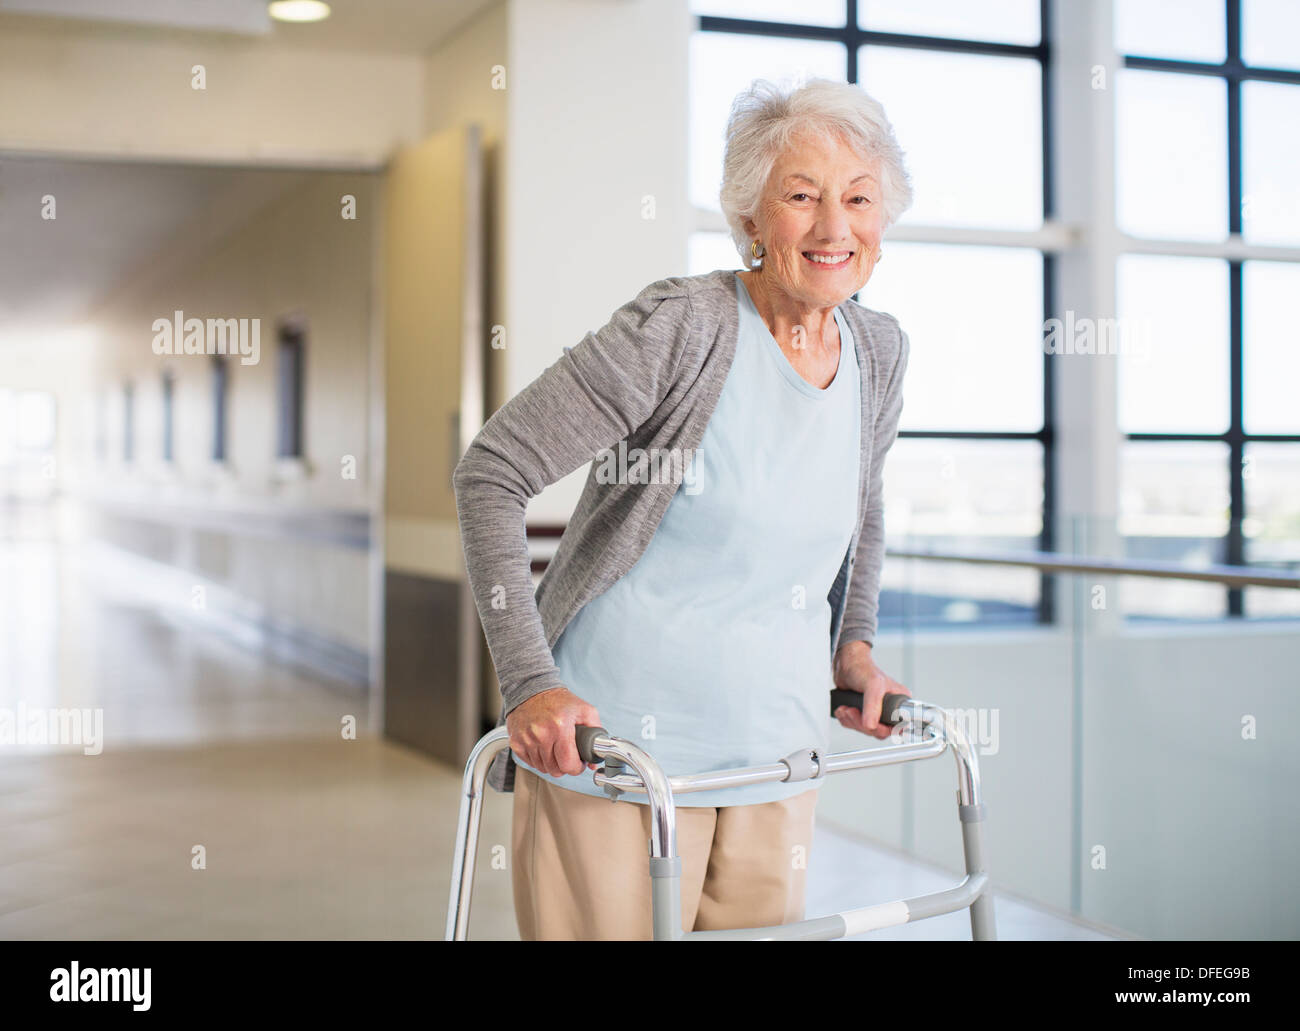 Senior patient using walker in hospital Stock Photo